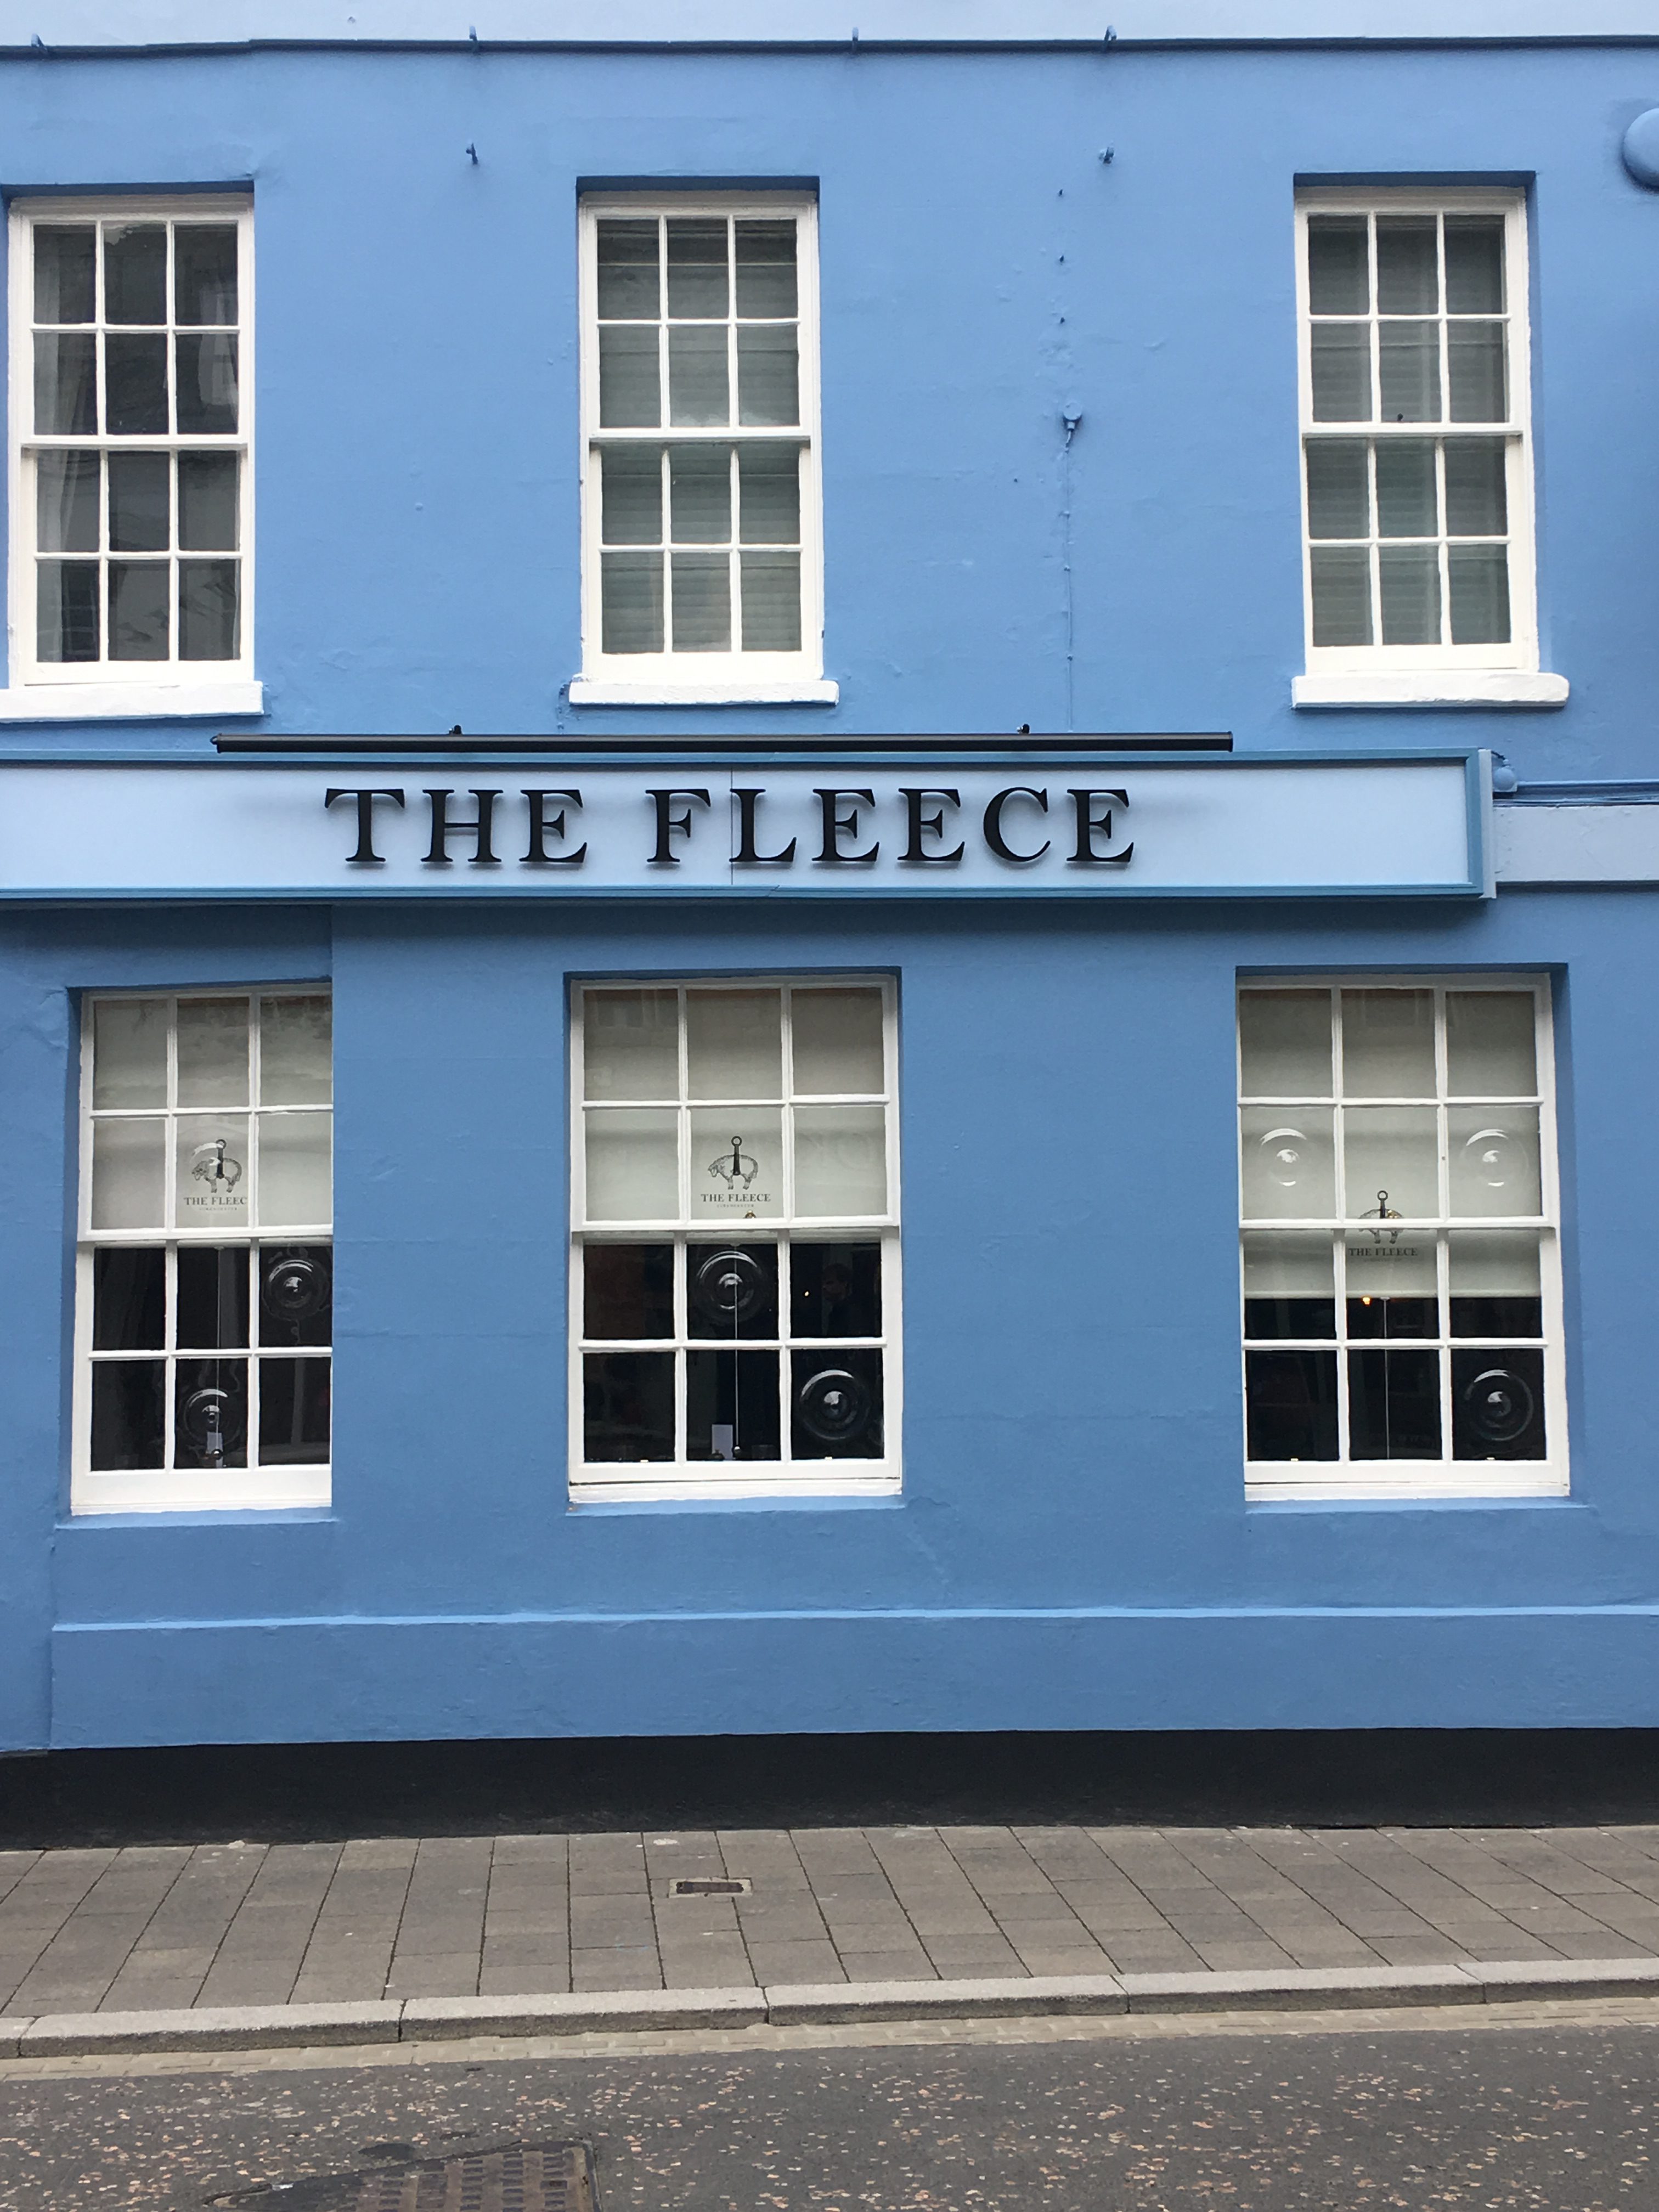 The Fleece in Cirencester